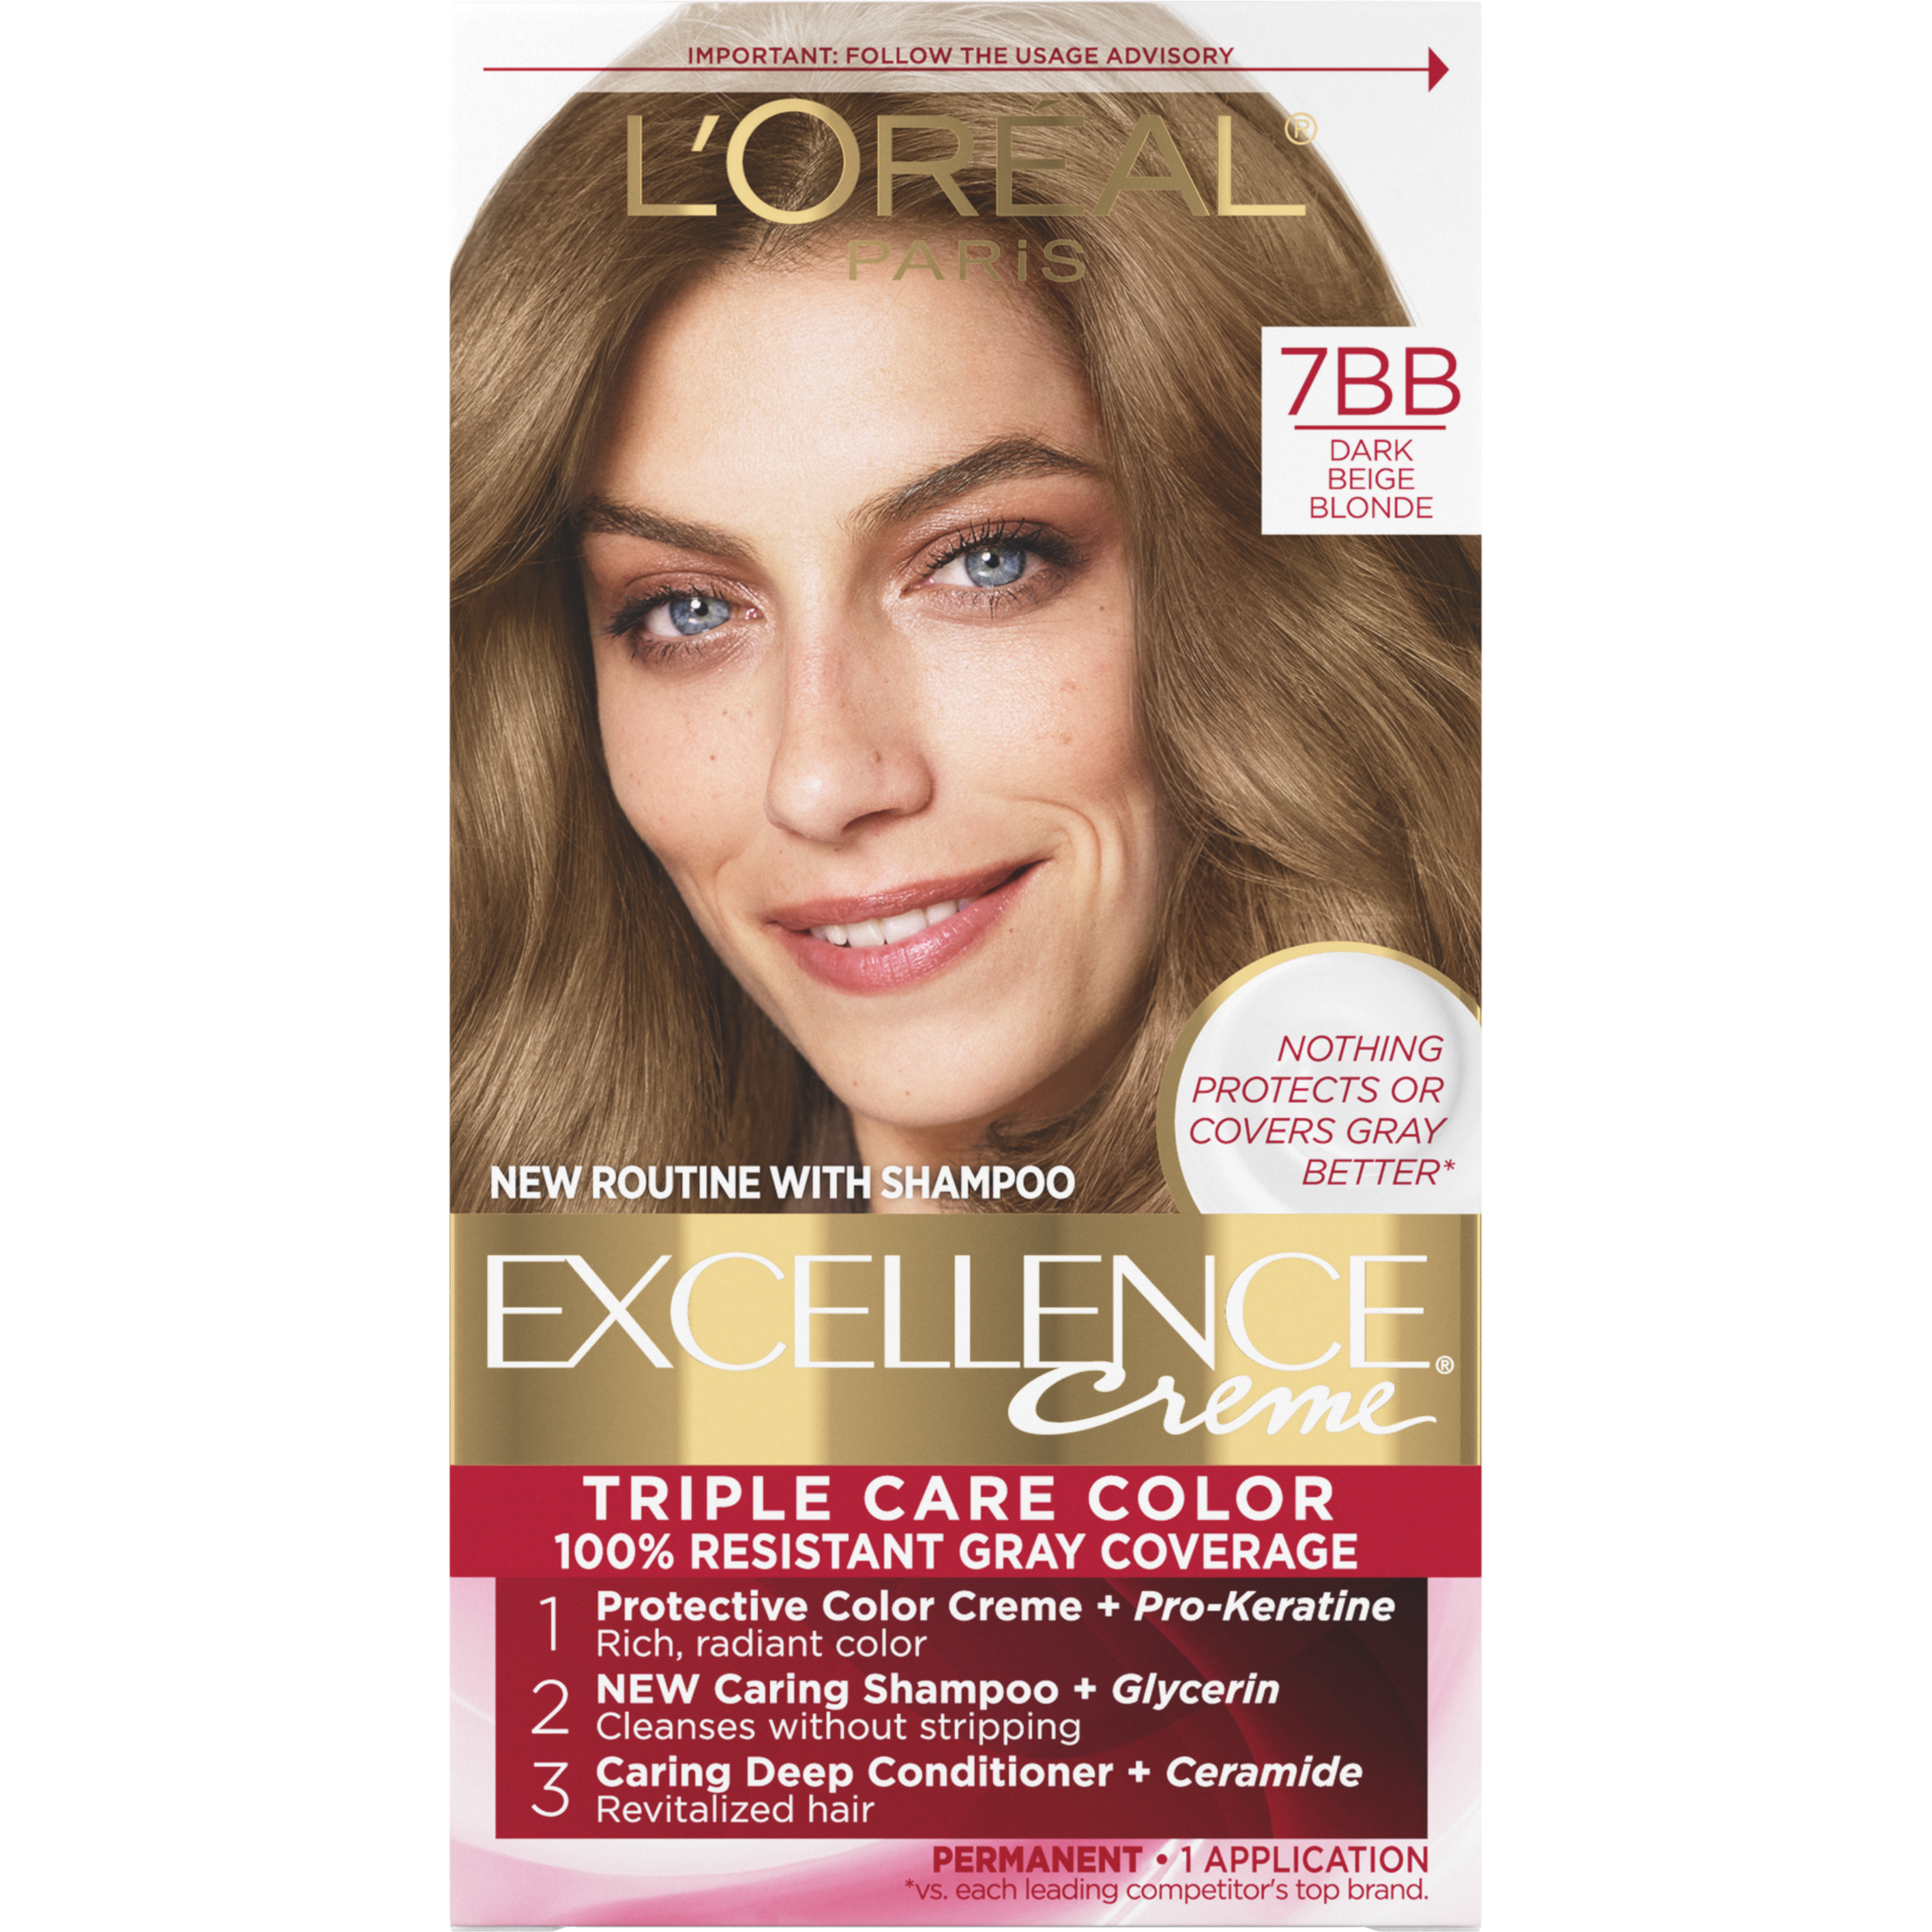 L'Oreal Paris Excellence Creme Permanent Hair Color, 7BB Dark Beige Blonde - image 1 of 8